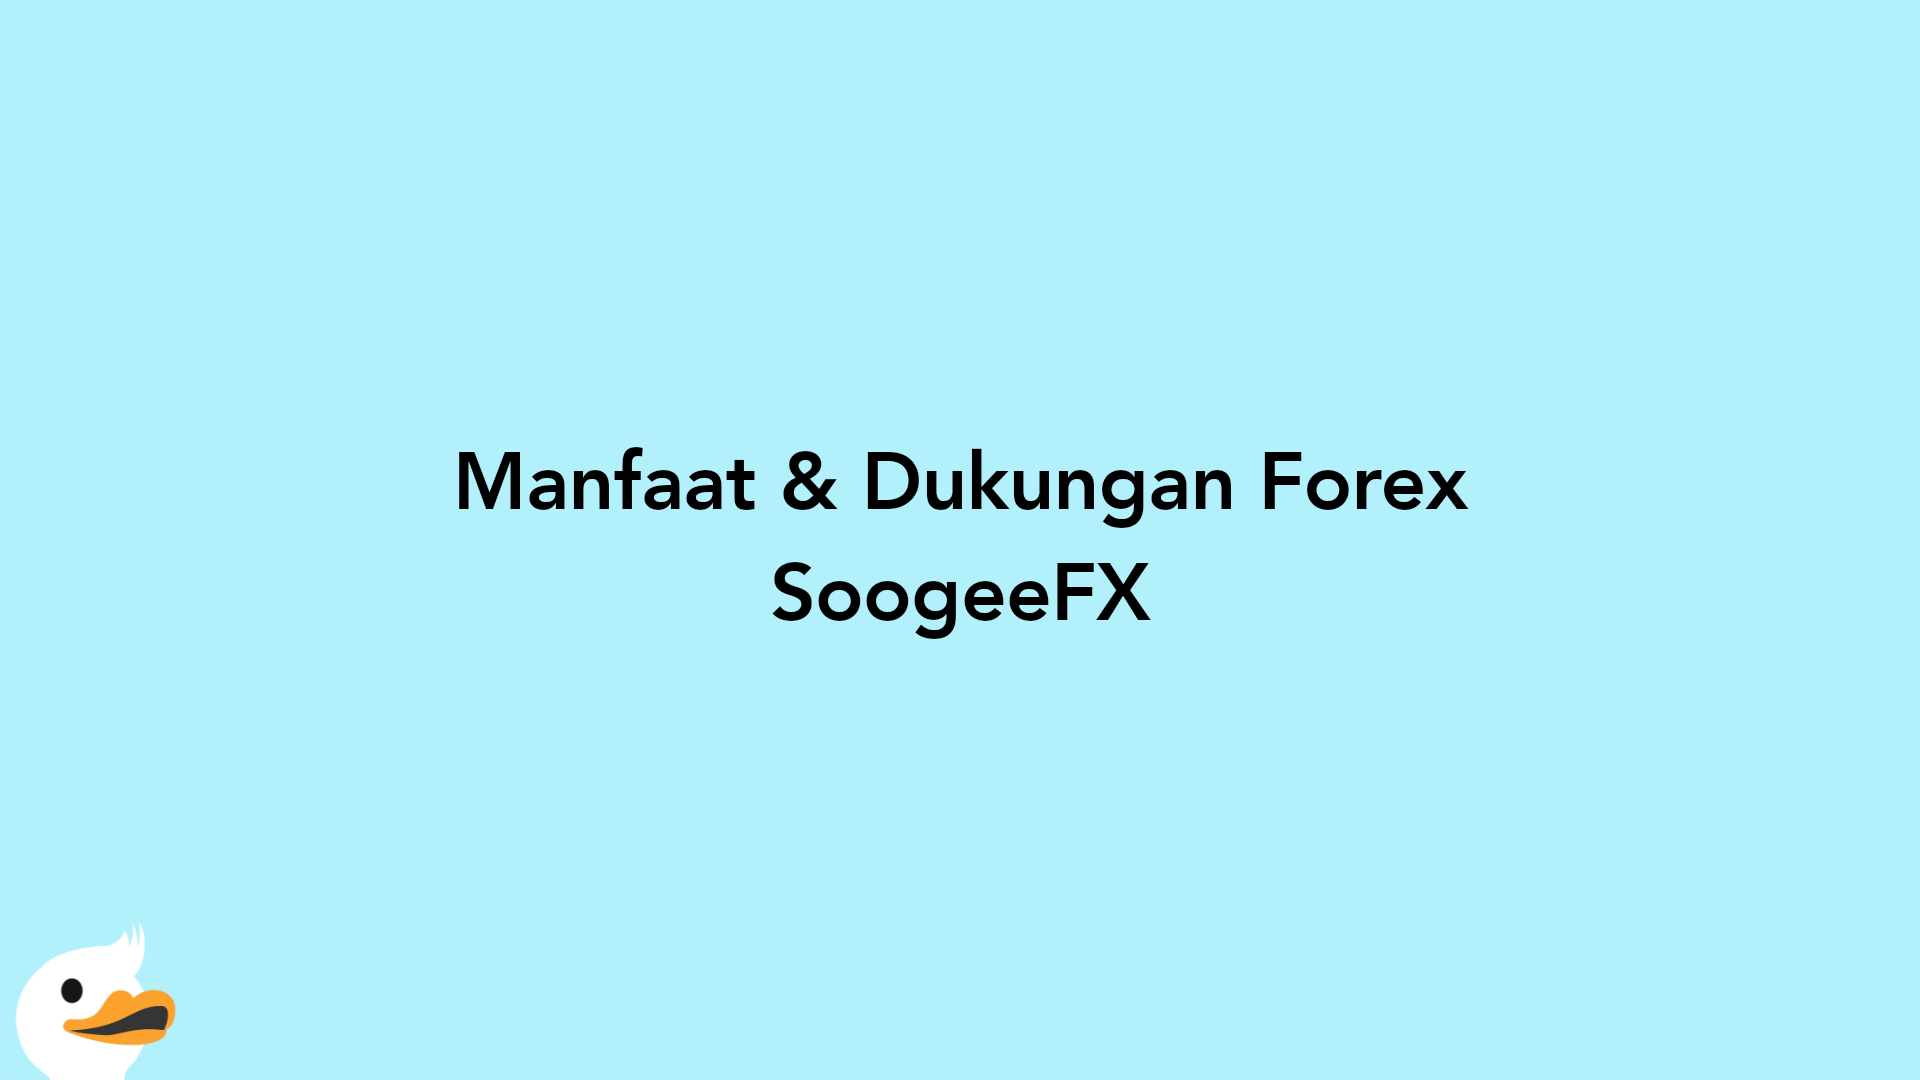 Manfaat & Dukungan Forex SoogeeFX